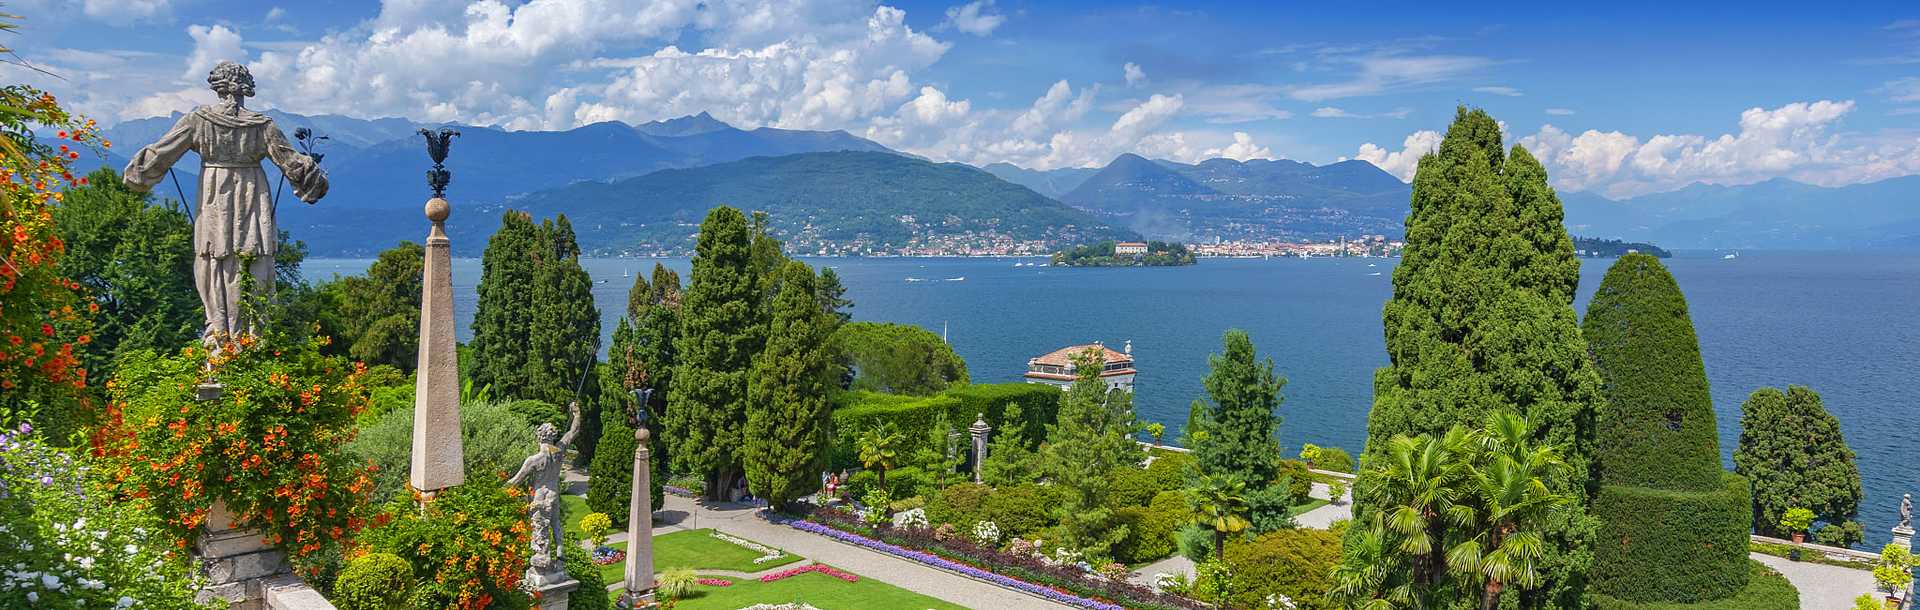 Luxury Tours - Lake Maggiore, Italy